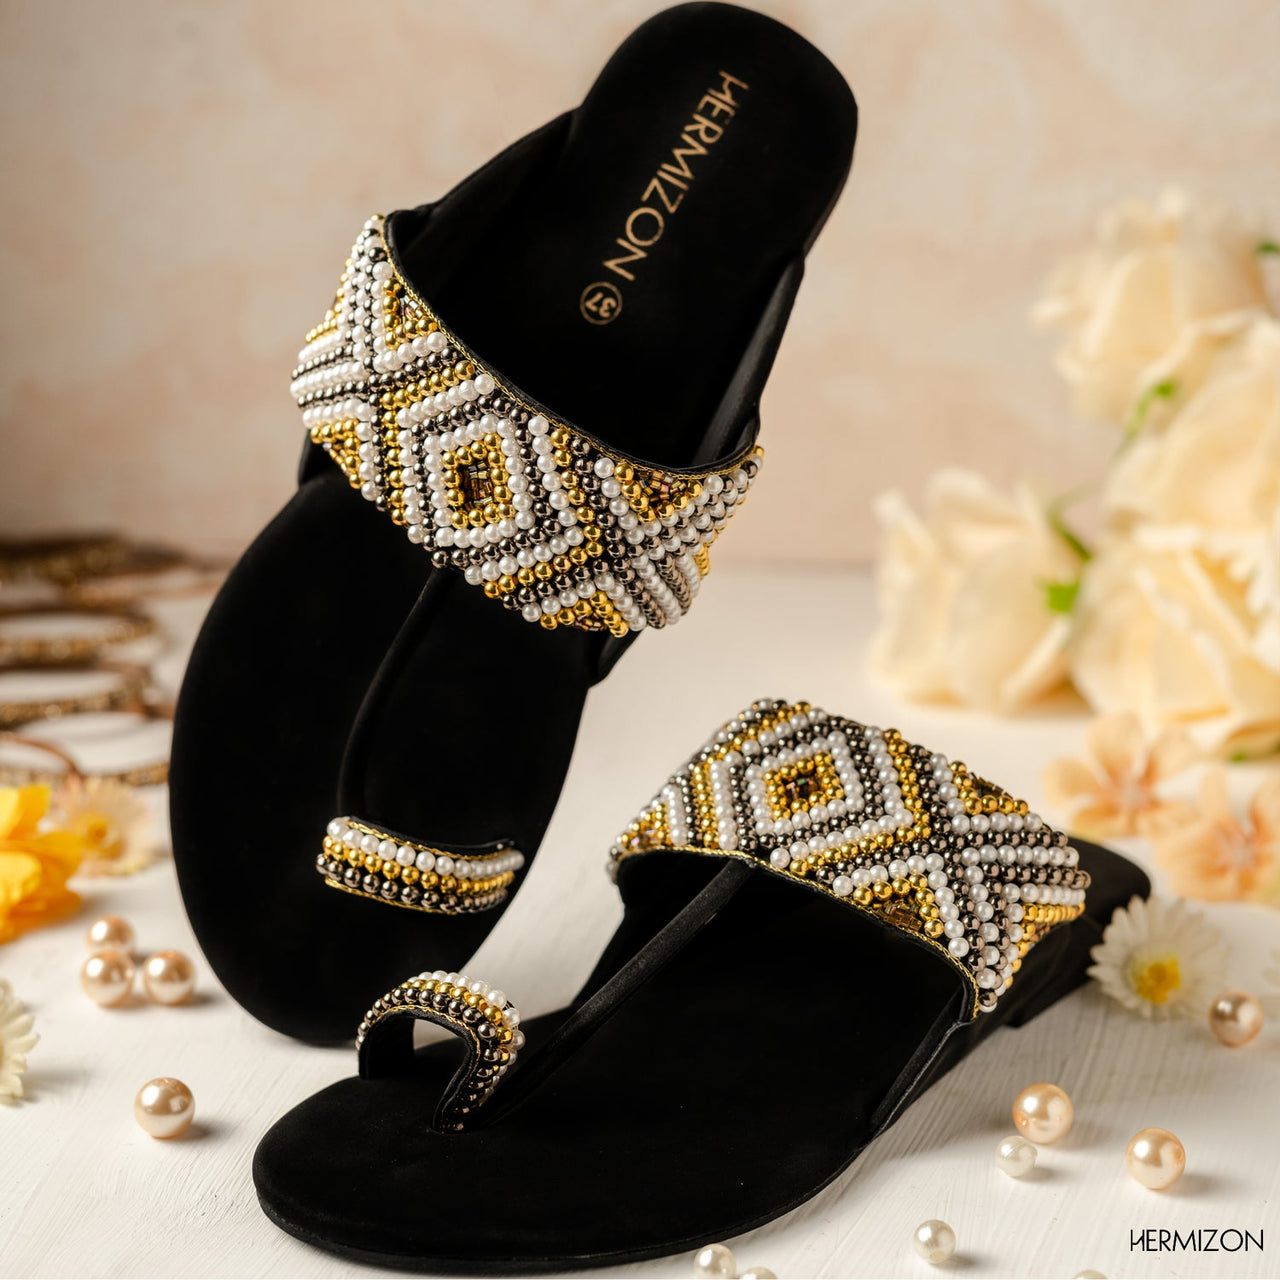 Hermizon brand shoe risa, black color and pearl design.